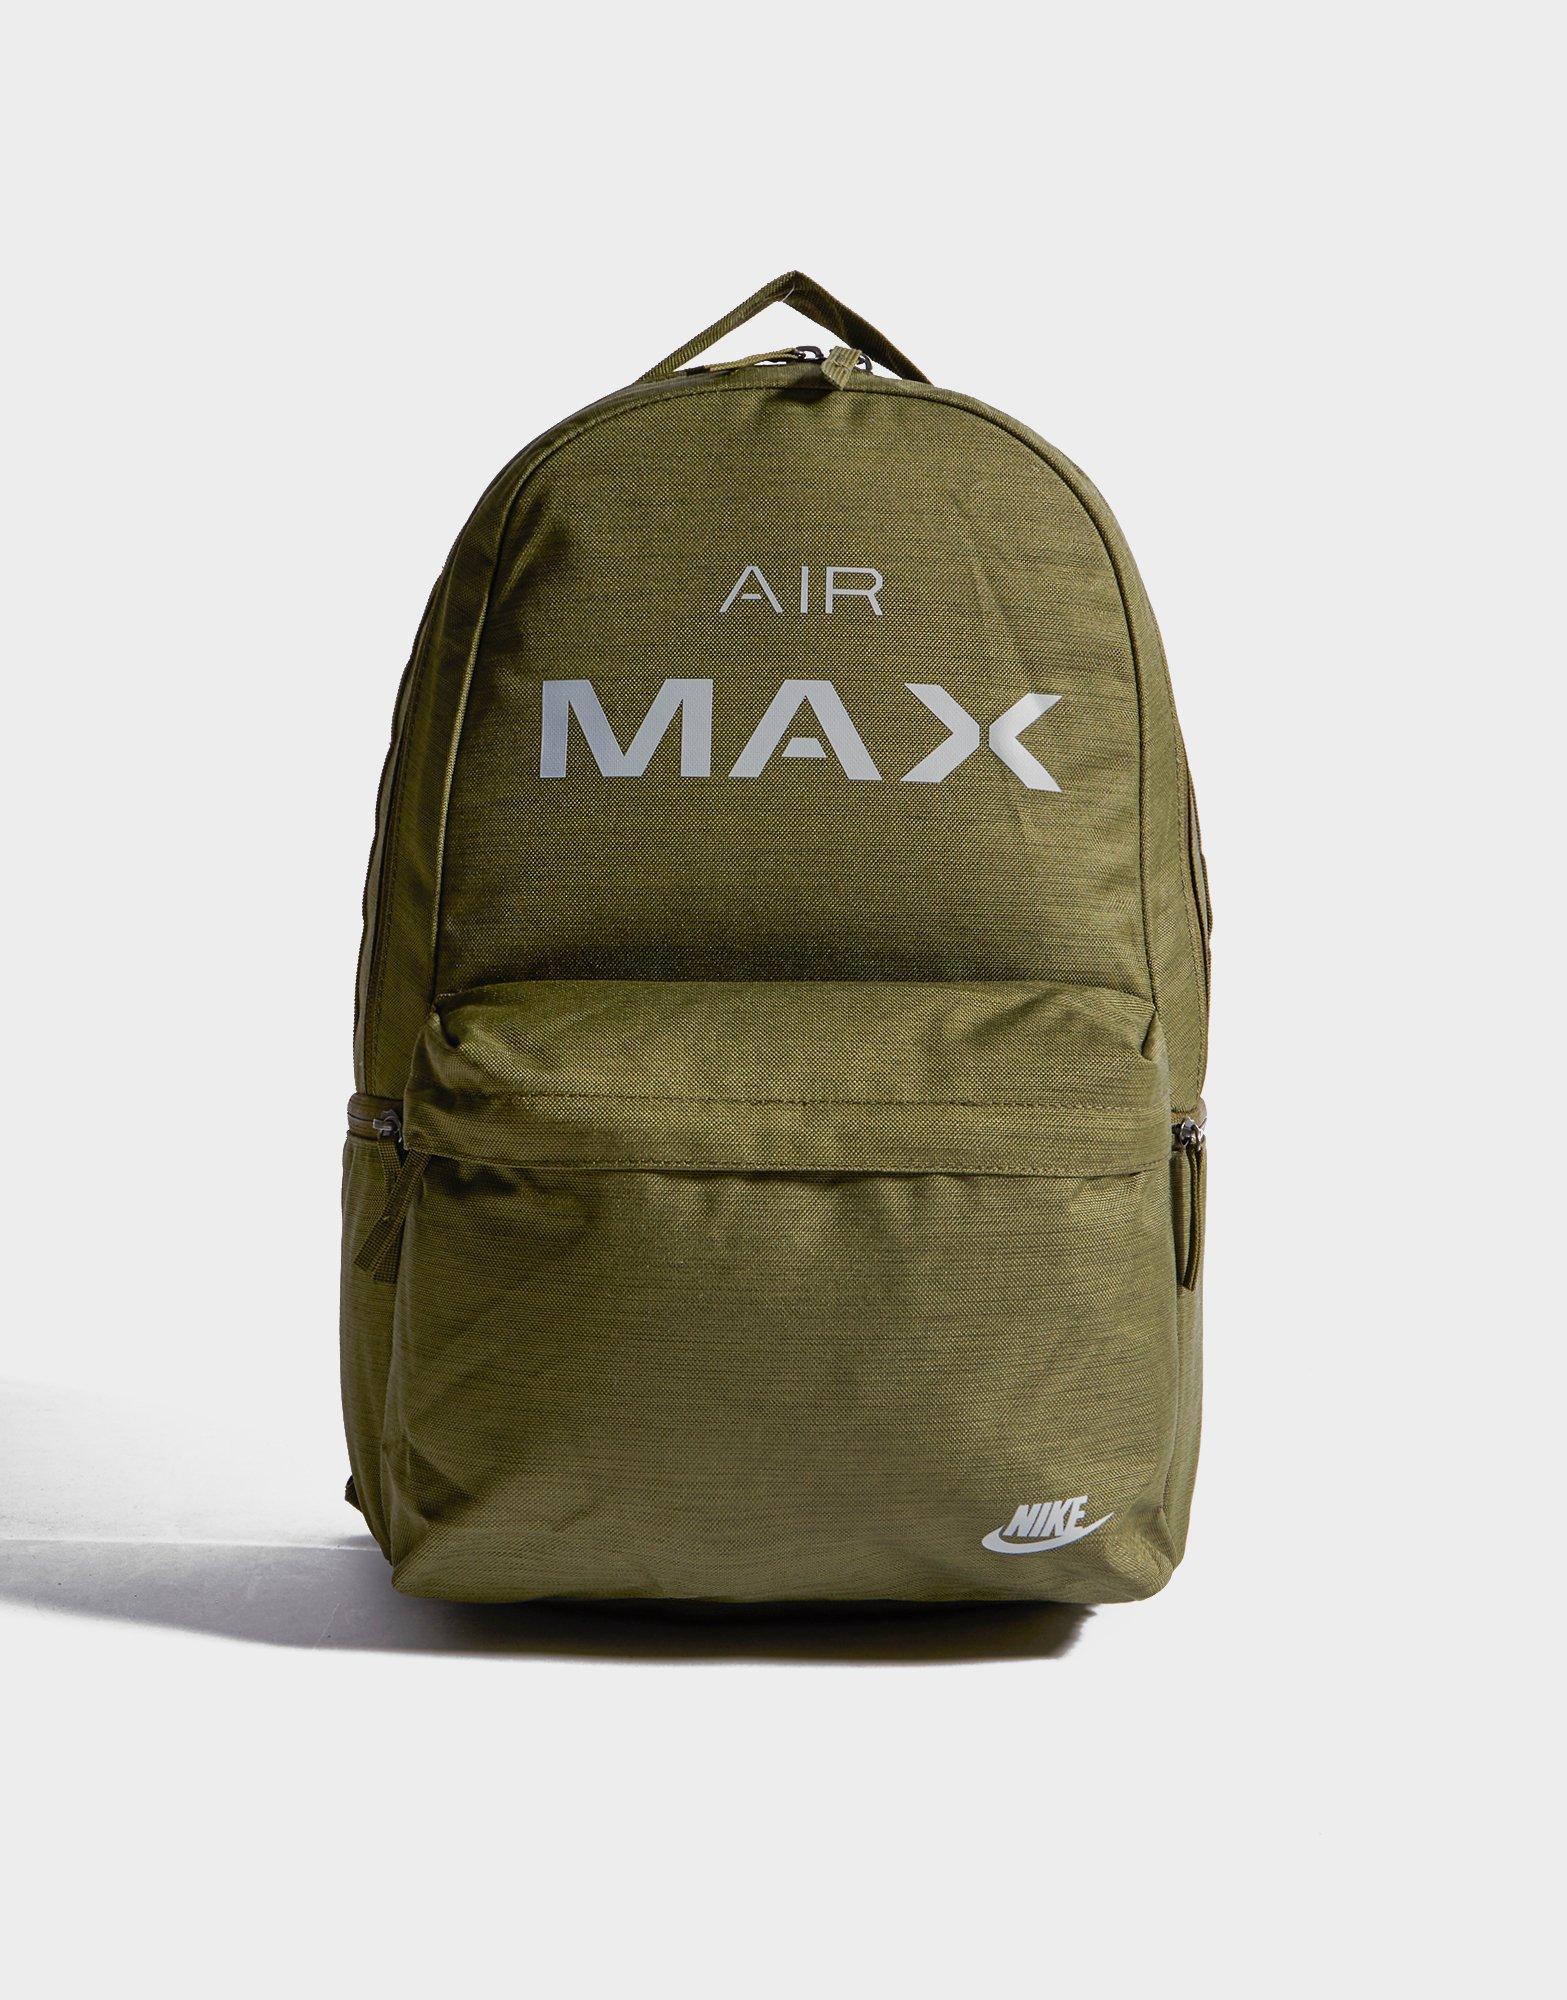 Parity \u003e nike air max bag green, Up to 